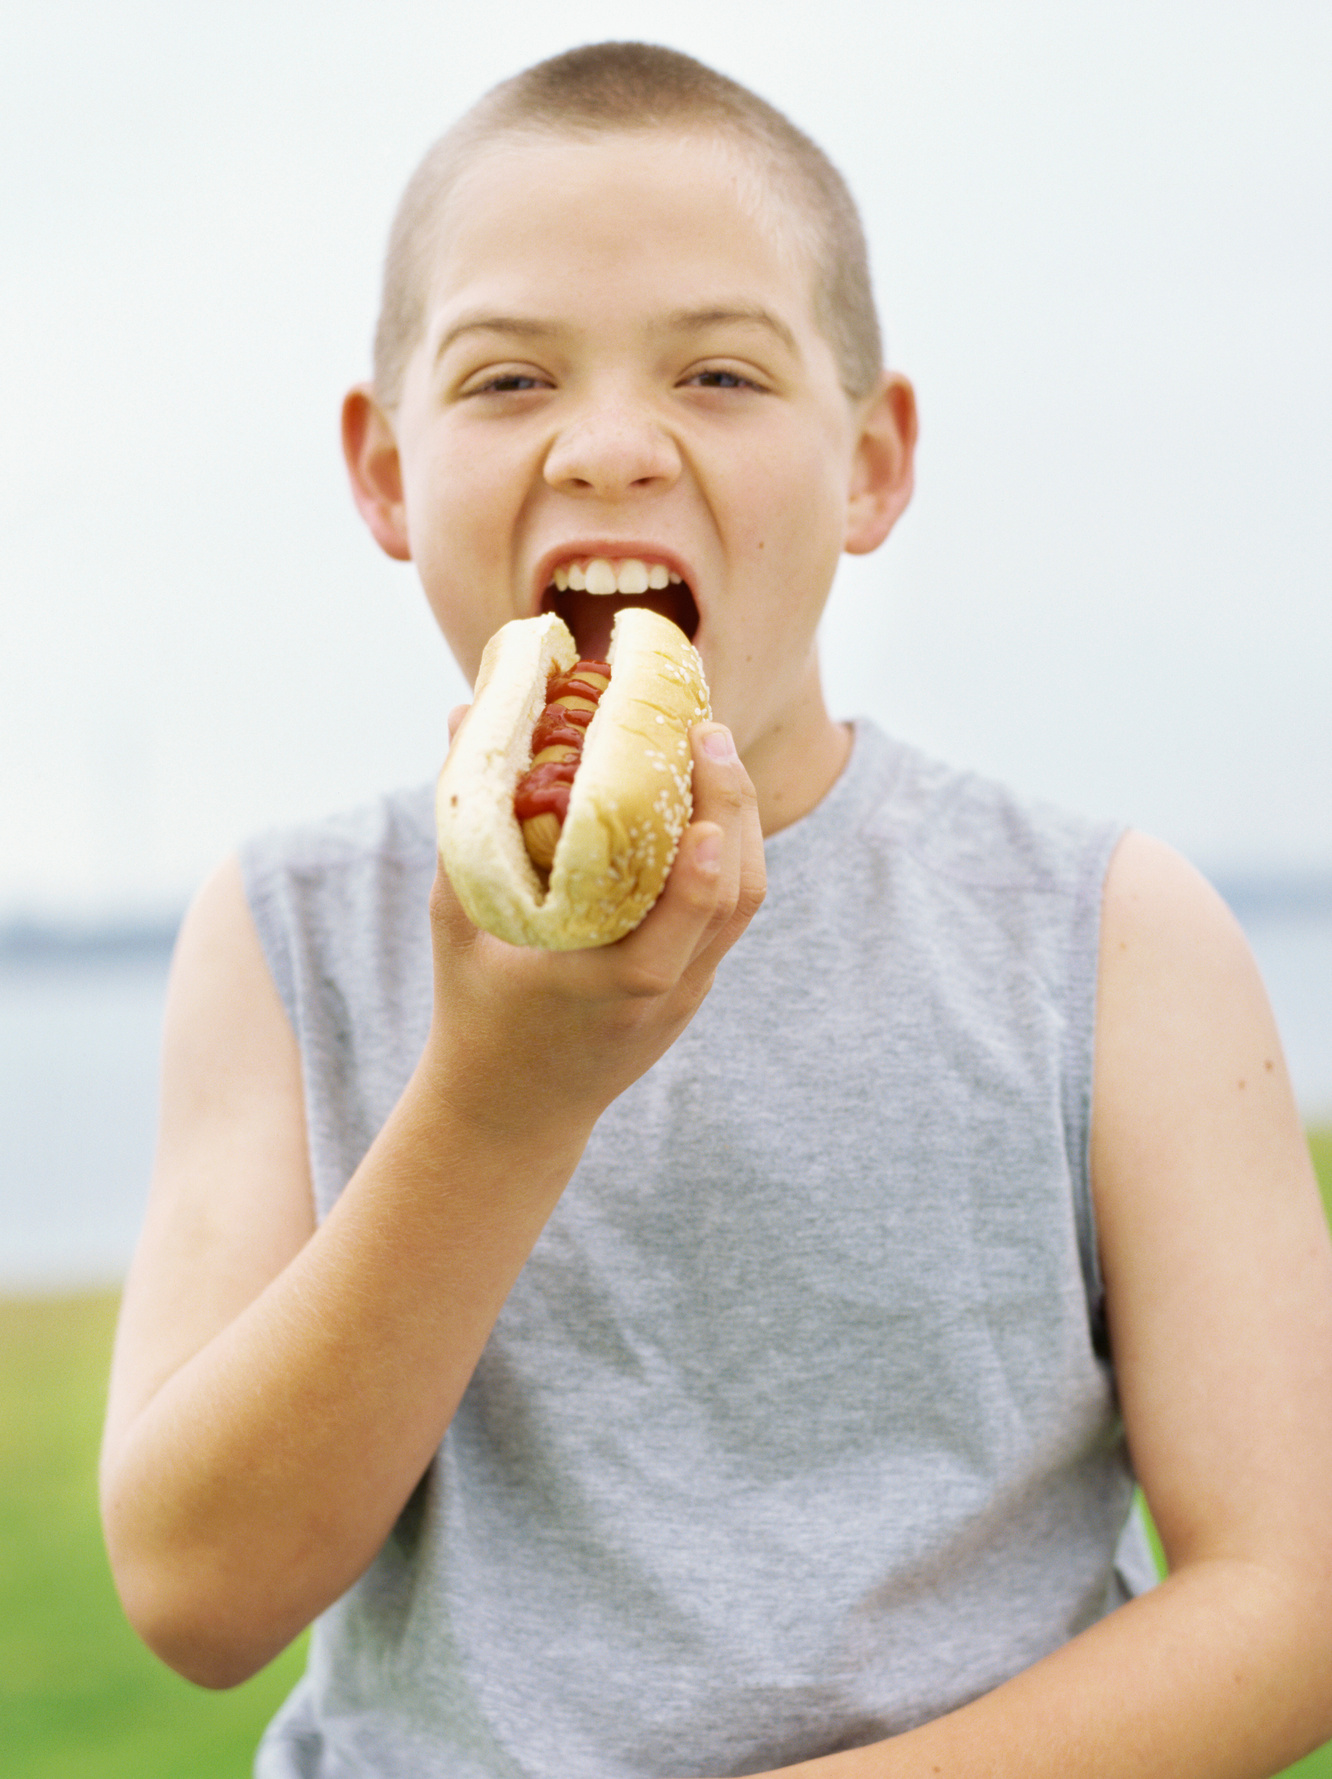 portrait of a boy eating a hot dog